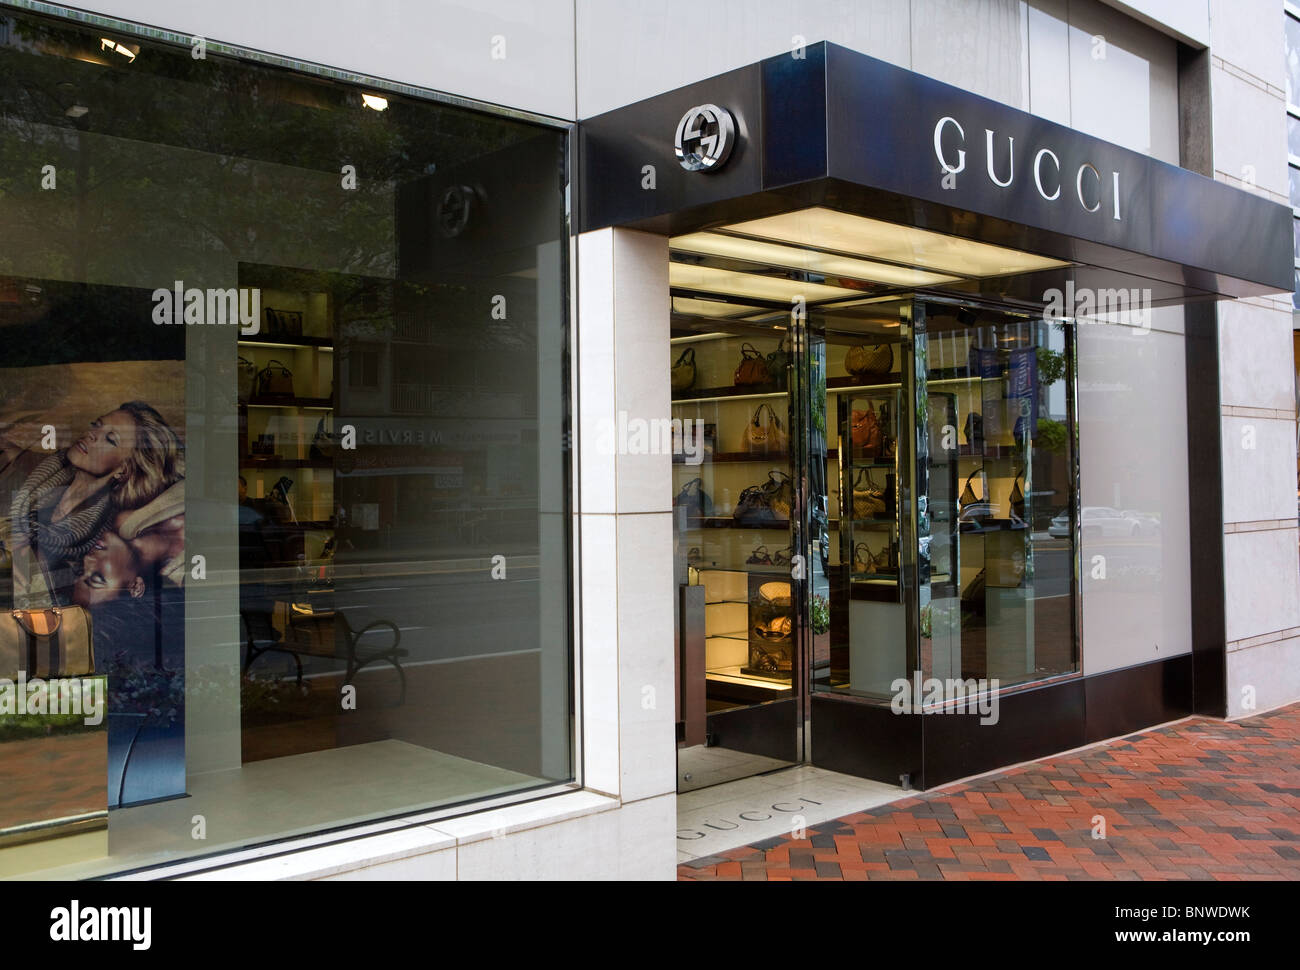 A Gucci retail store. Stock Photo